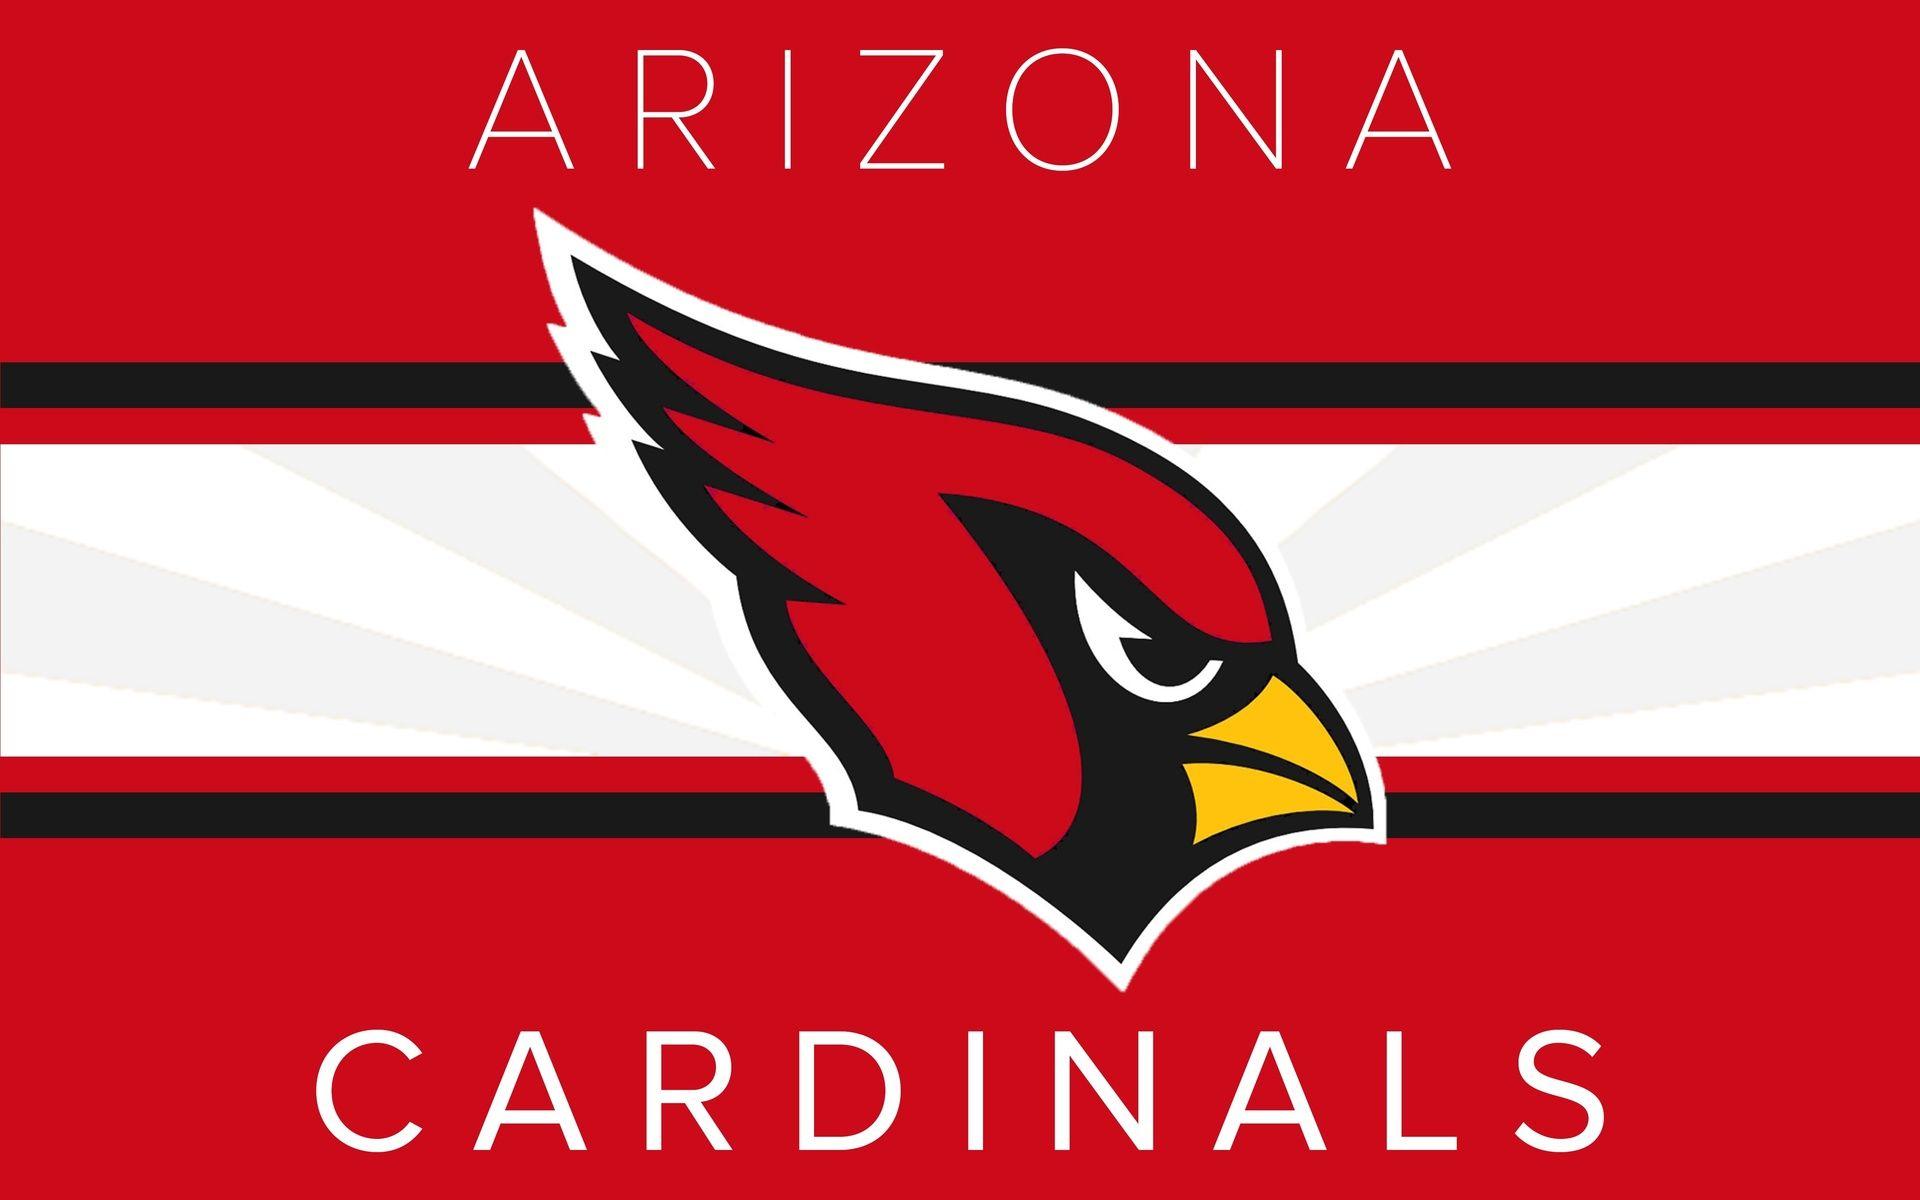 Arizona Cardinals Wallpapers - Wallpaper Cave